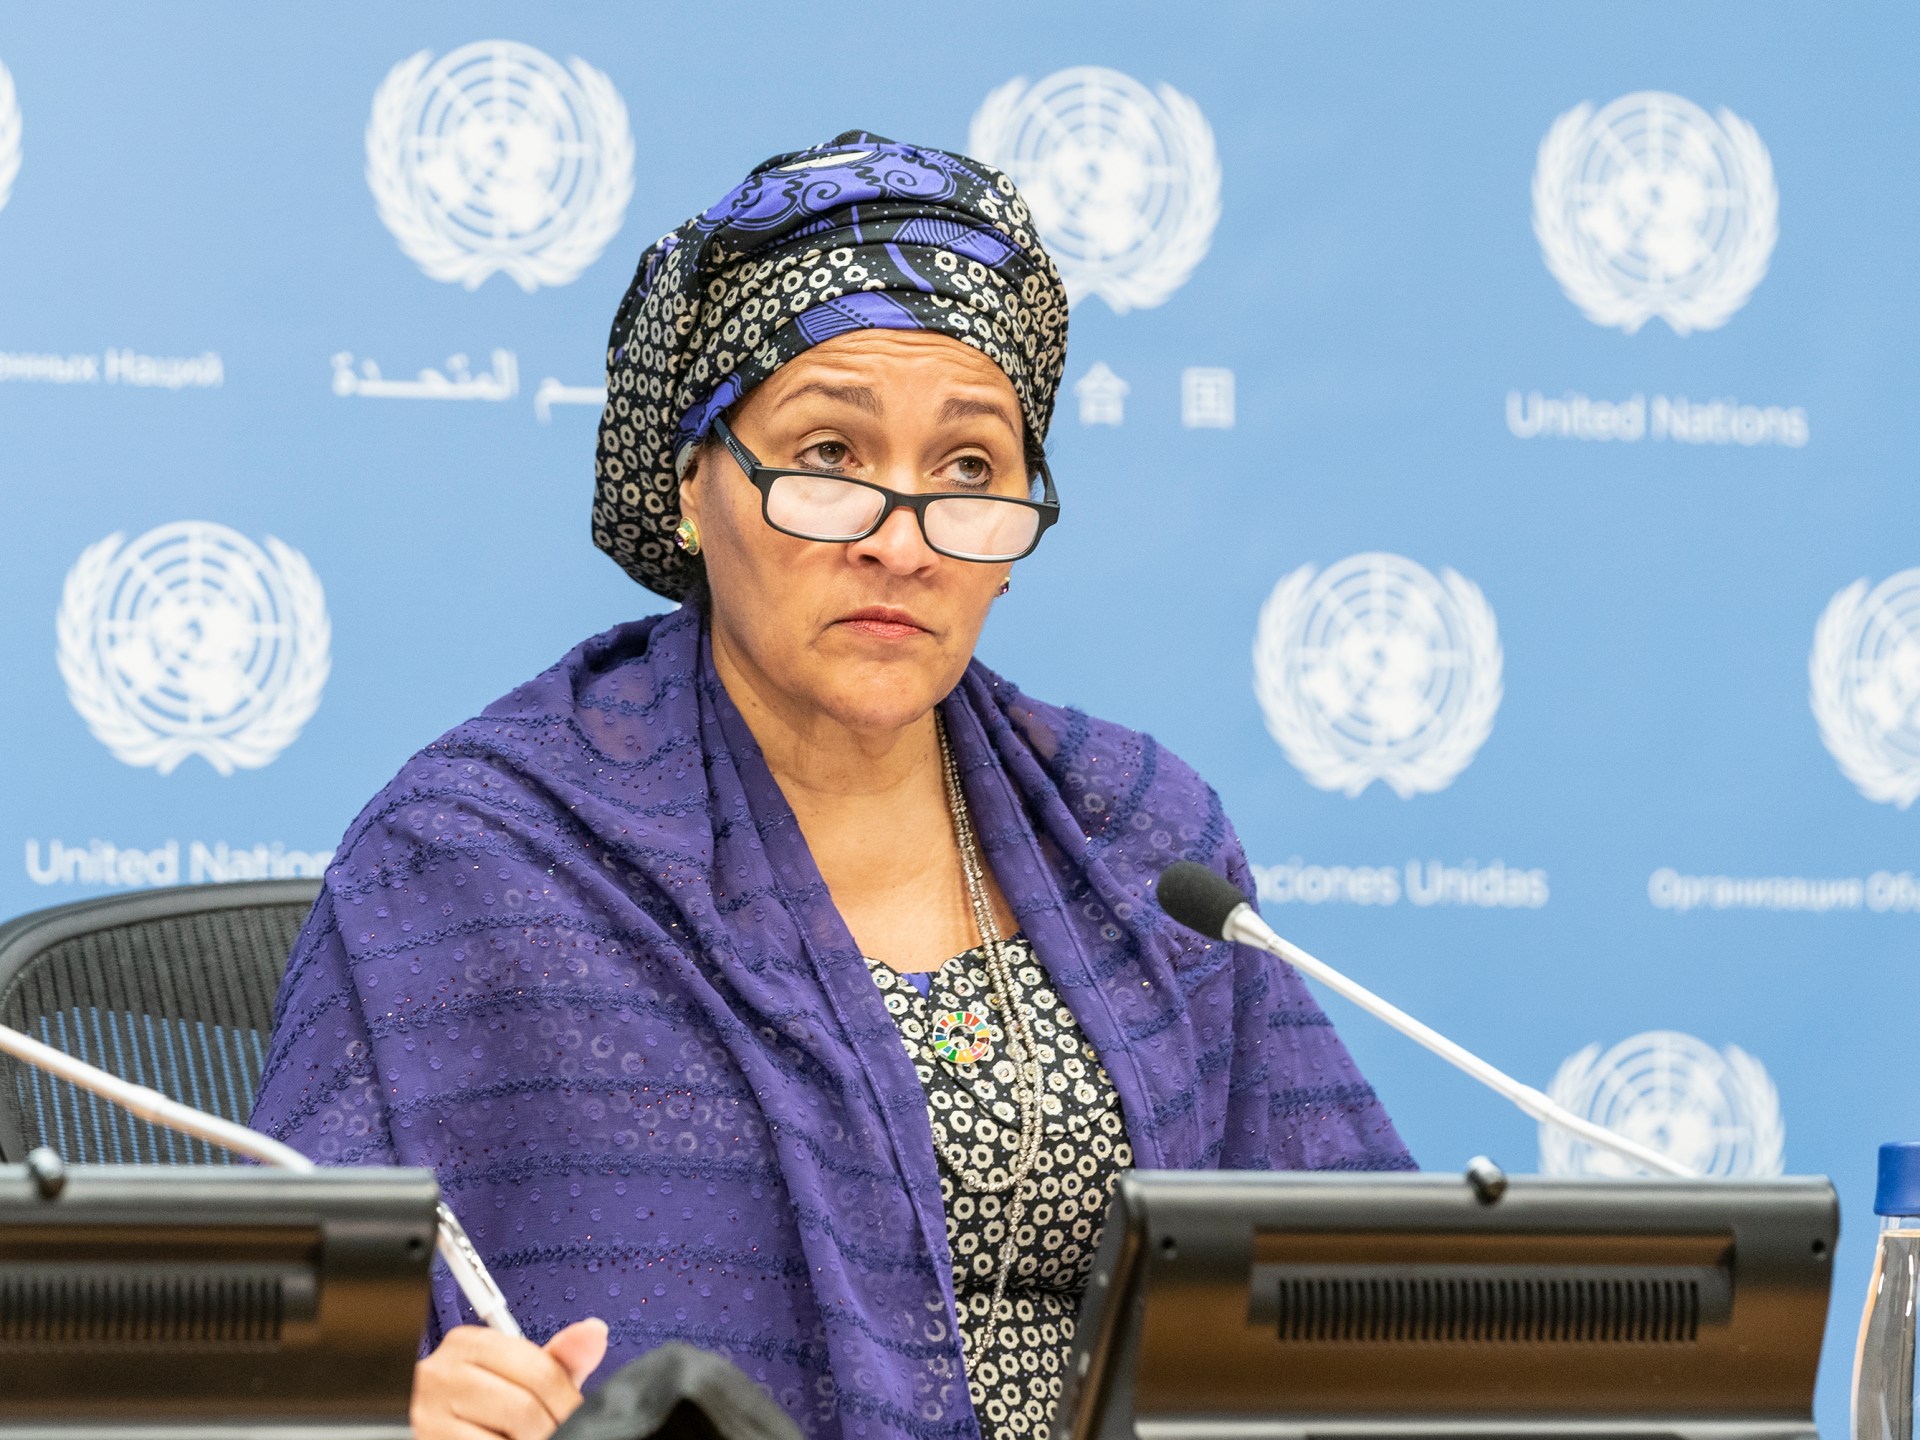 ‘Progress’ made on ladies’s rights: UN envoy after Taliban talks